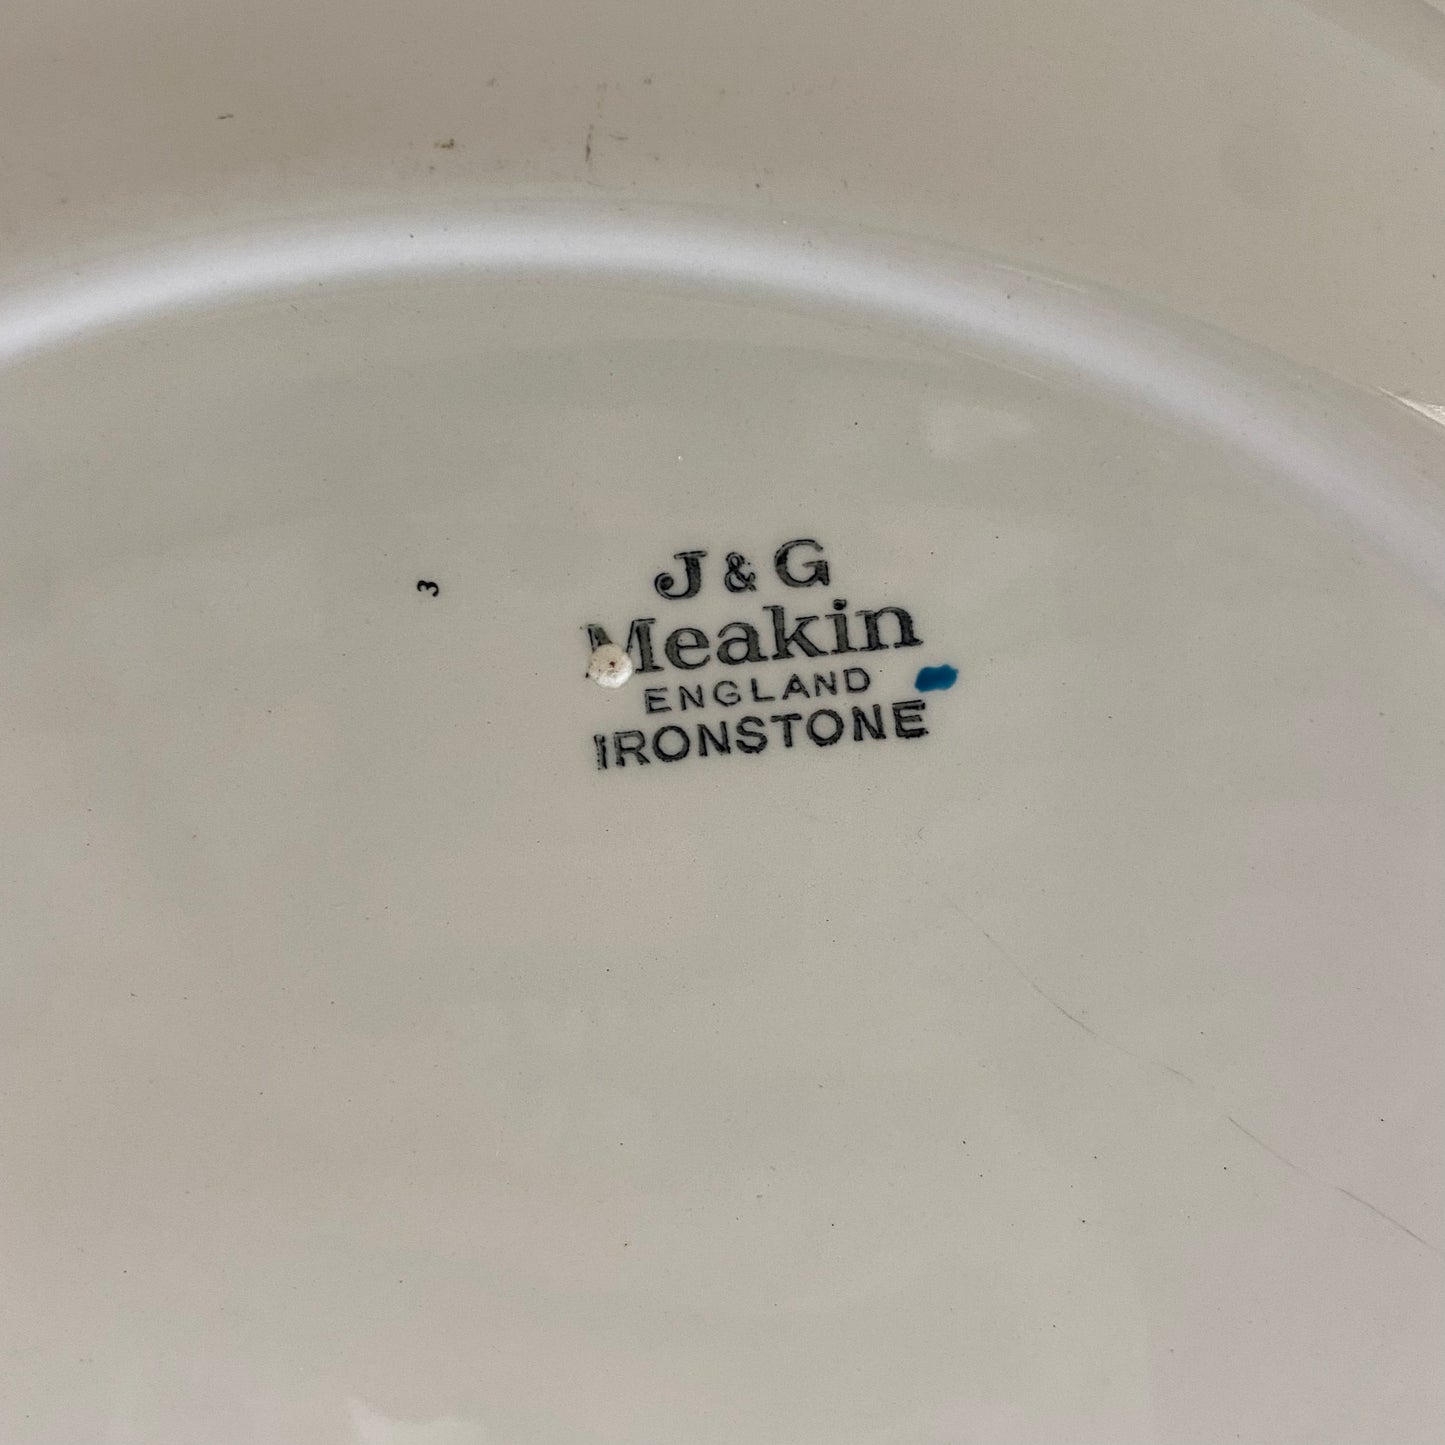 J & G Meakin Studio "Elite" Serving Plate